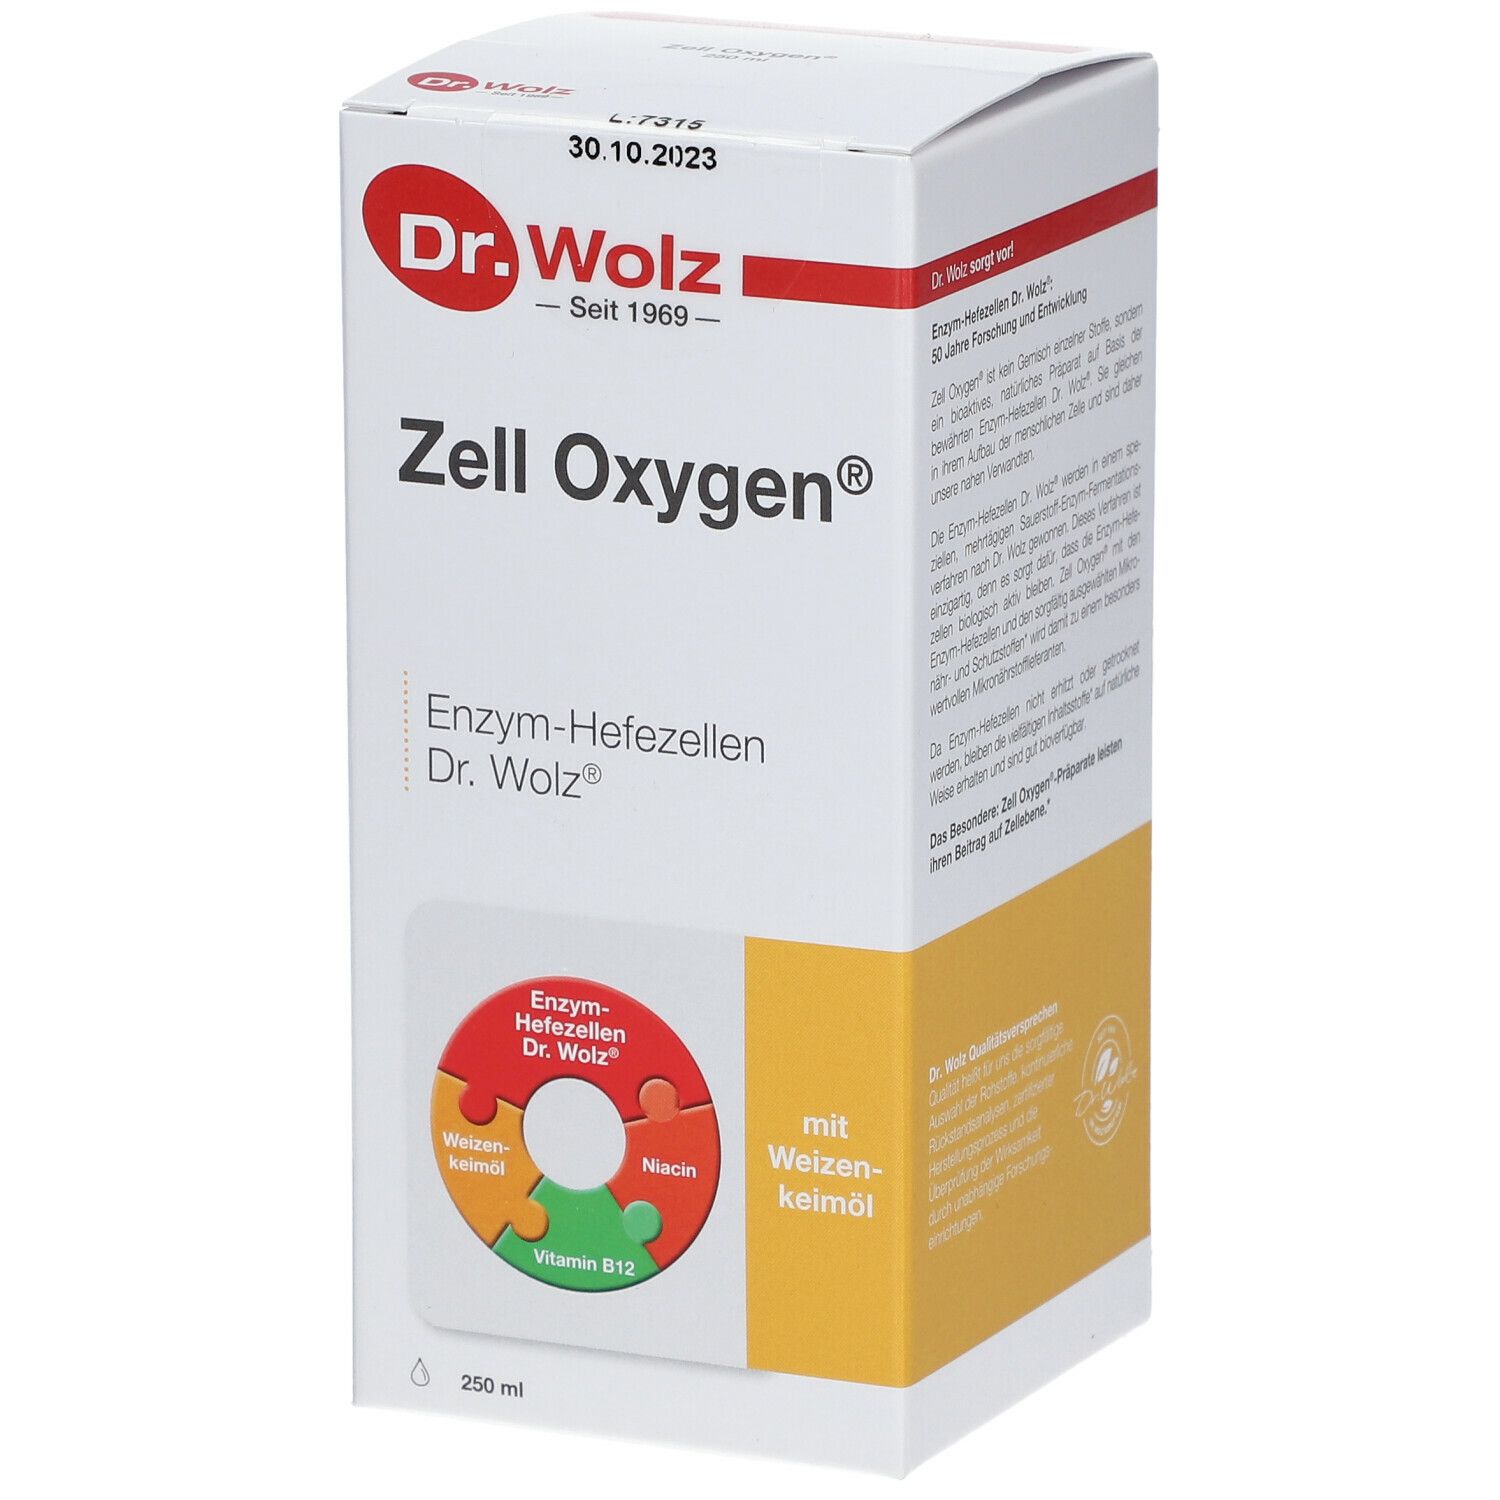 Zell Oxygen®